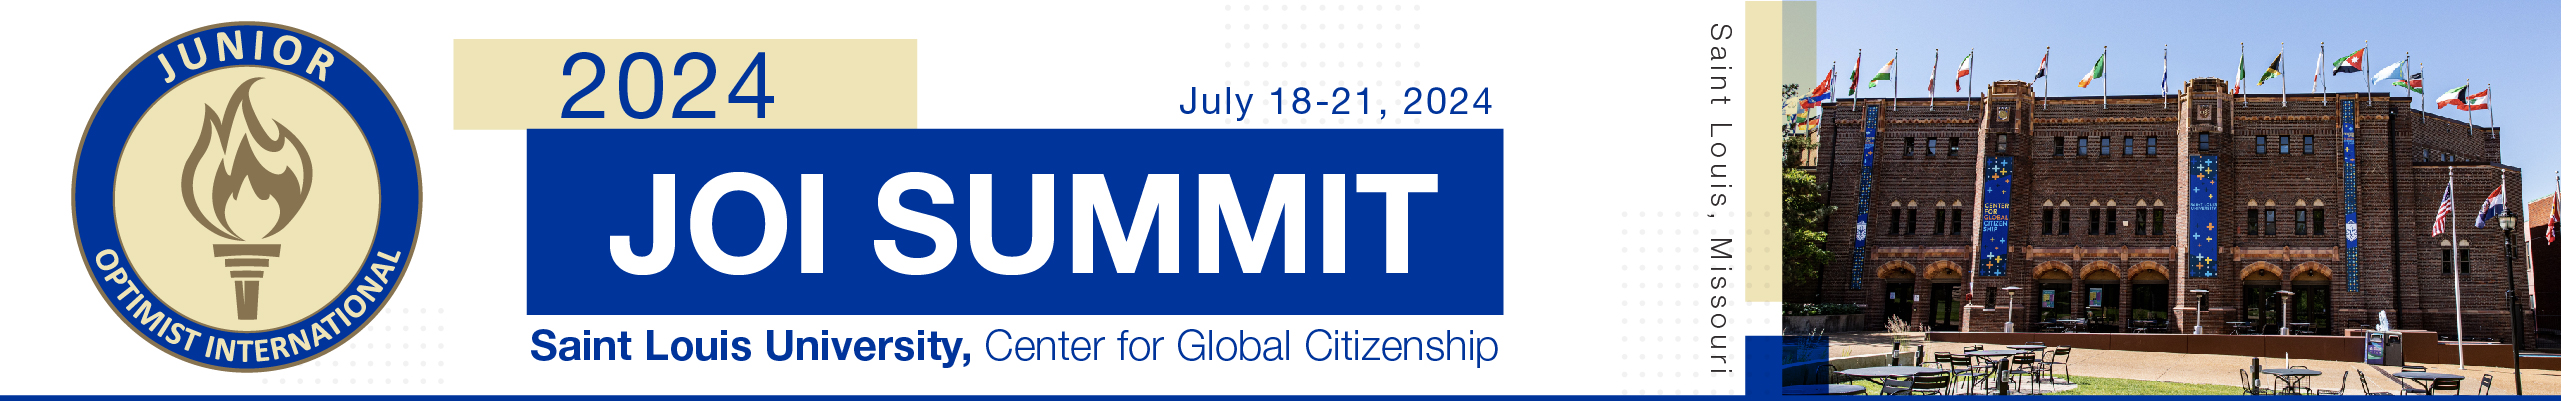 Junior Optimist International Convention
July 18 - July 21, 2024